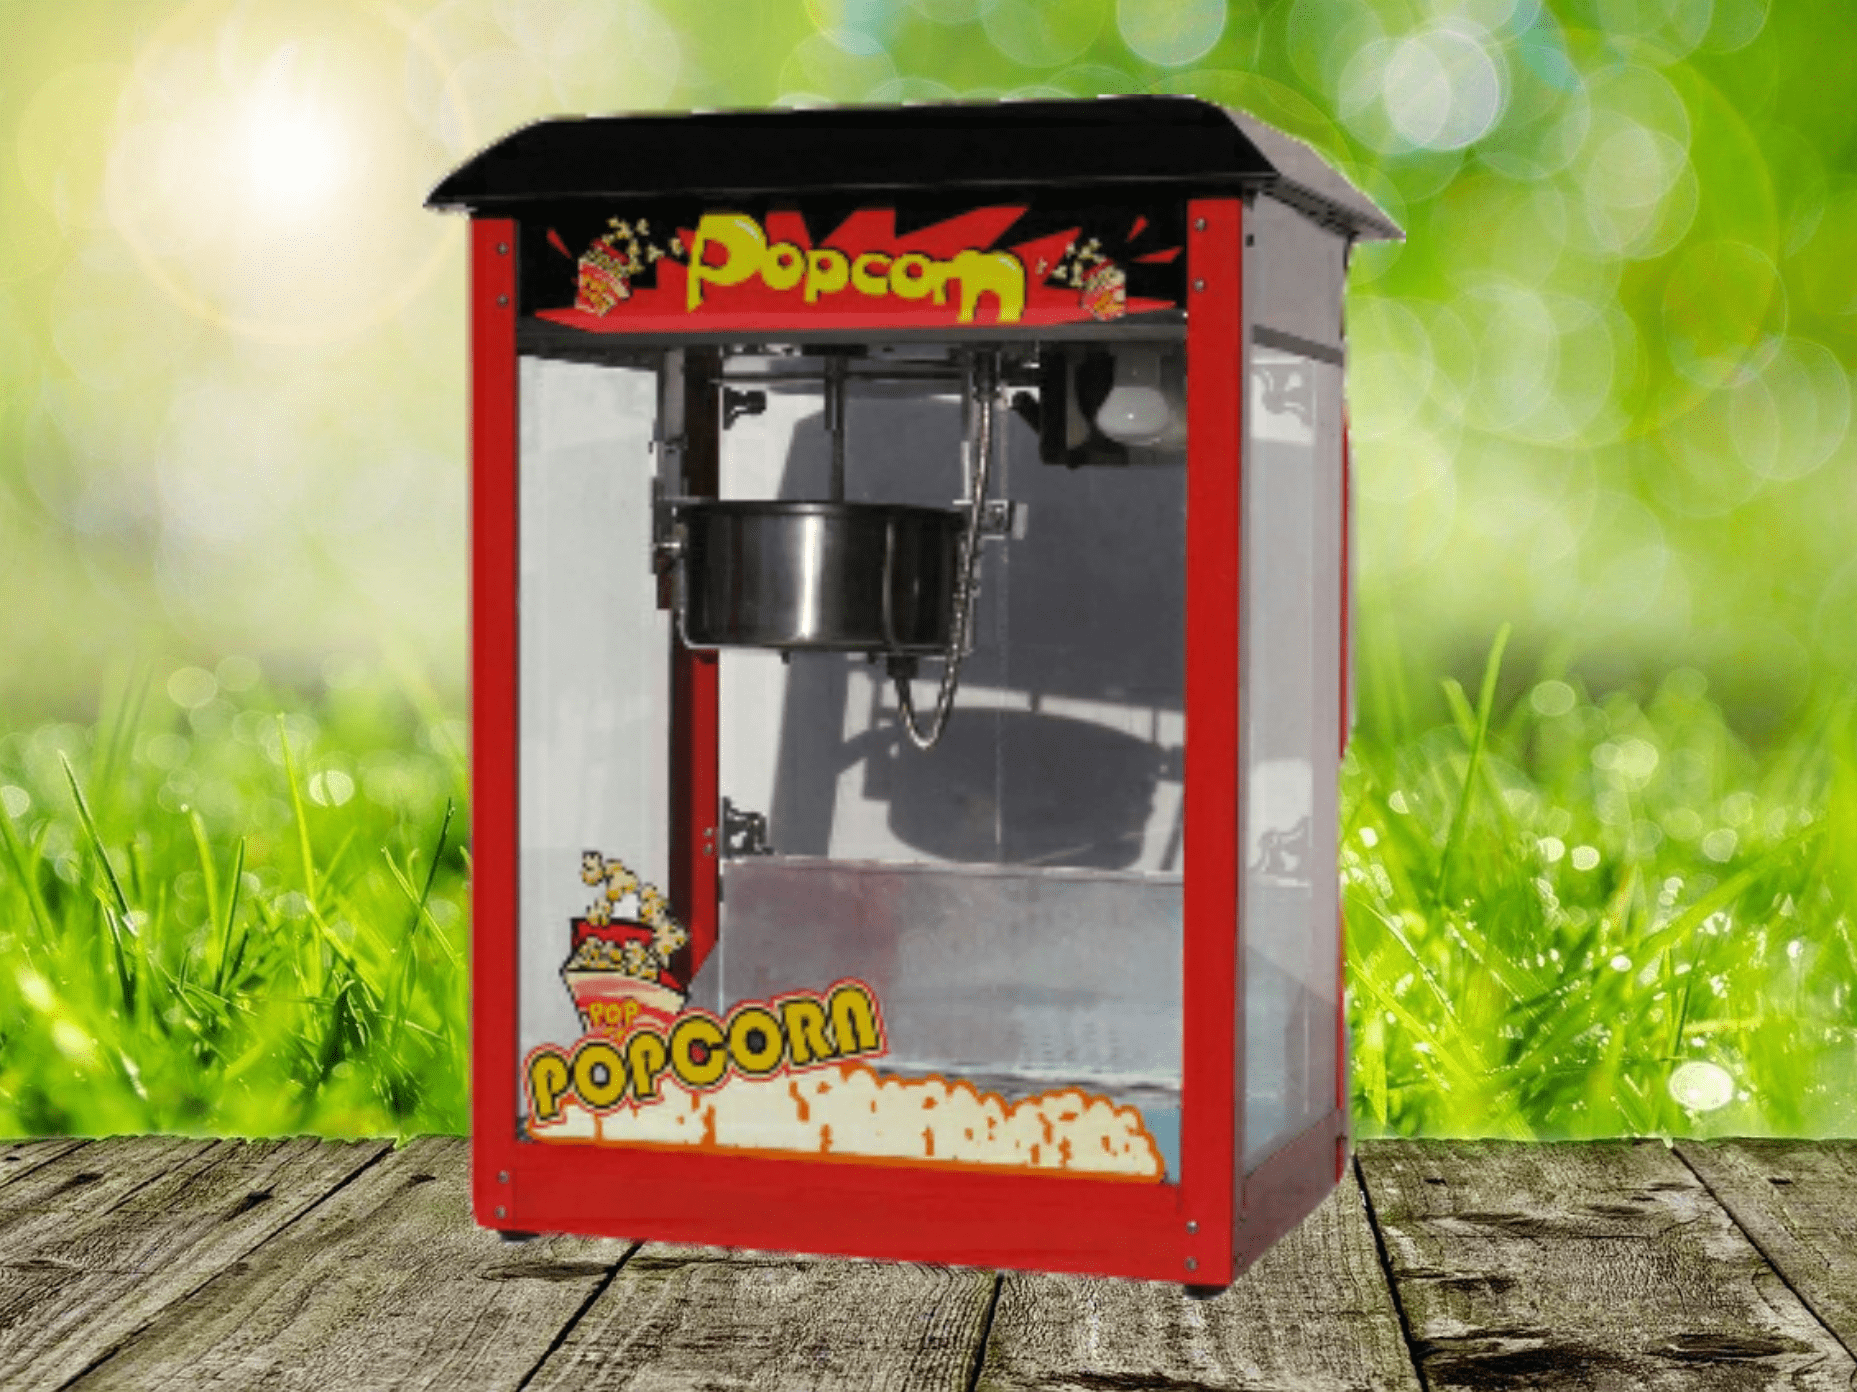 Popcornmaschine Popcorn selbst machen mieten Eventverleih Fun Food Spassfabrik Fun Food Kinderfest Kindergeburtstag